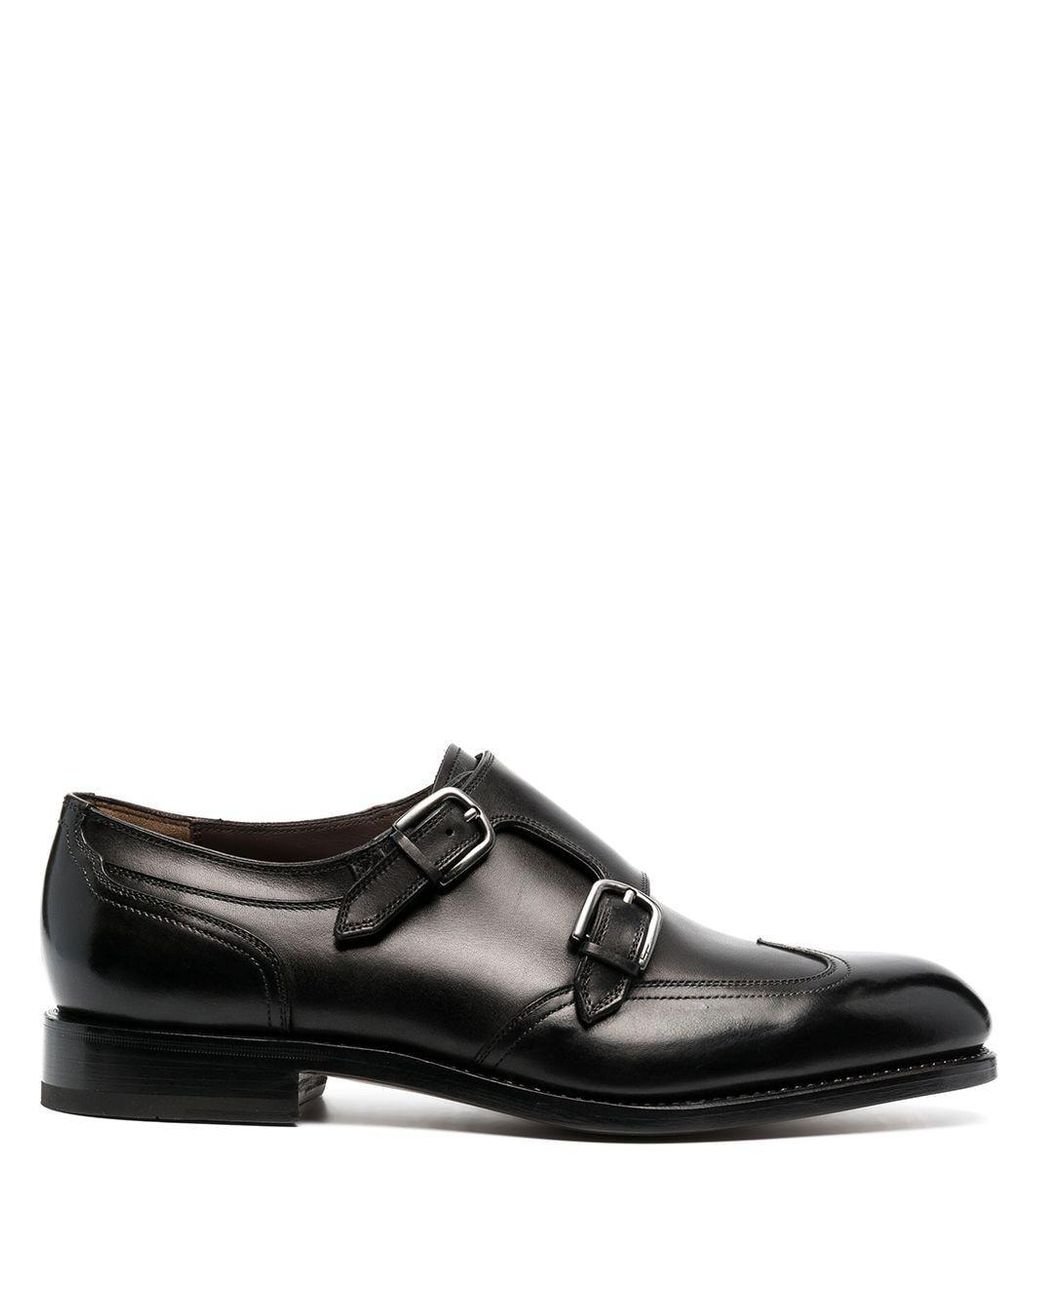 Ferragamo Leather Monk Strap Shoes in Black for Men - Lyst